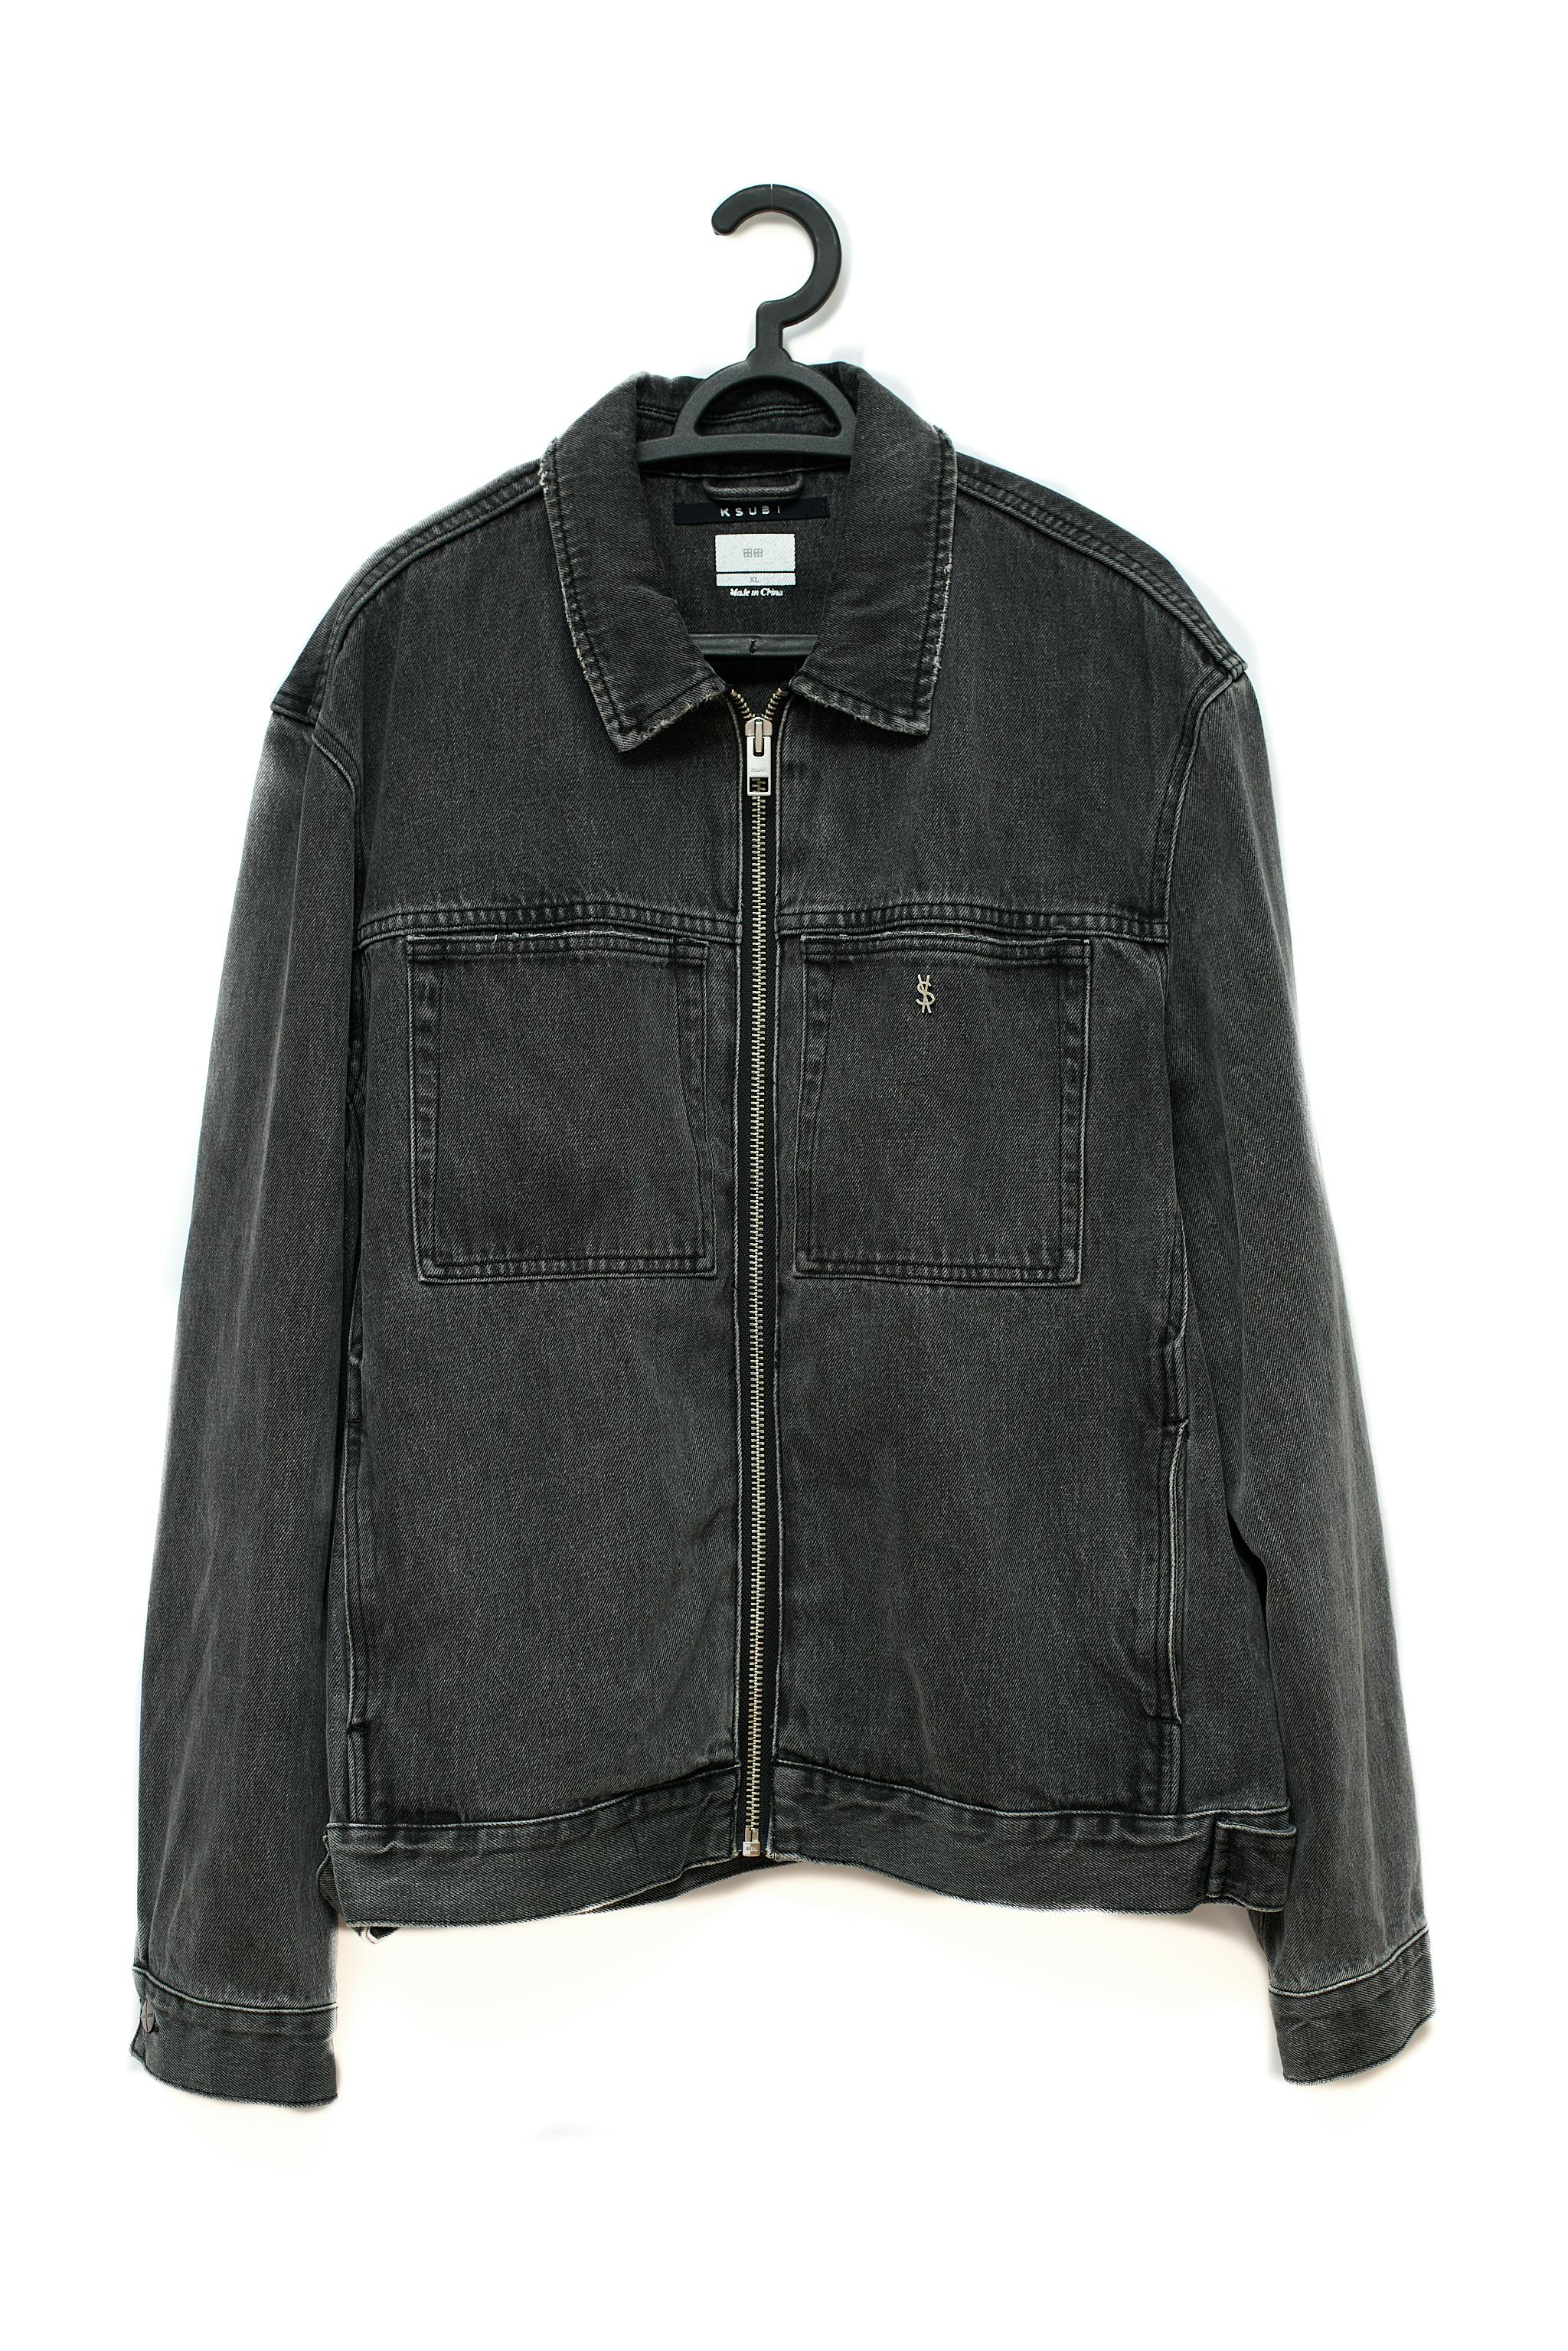 Ksubi Black Denim Jacket Size XL - 1